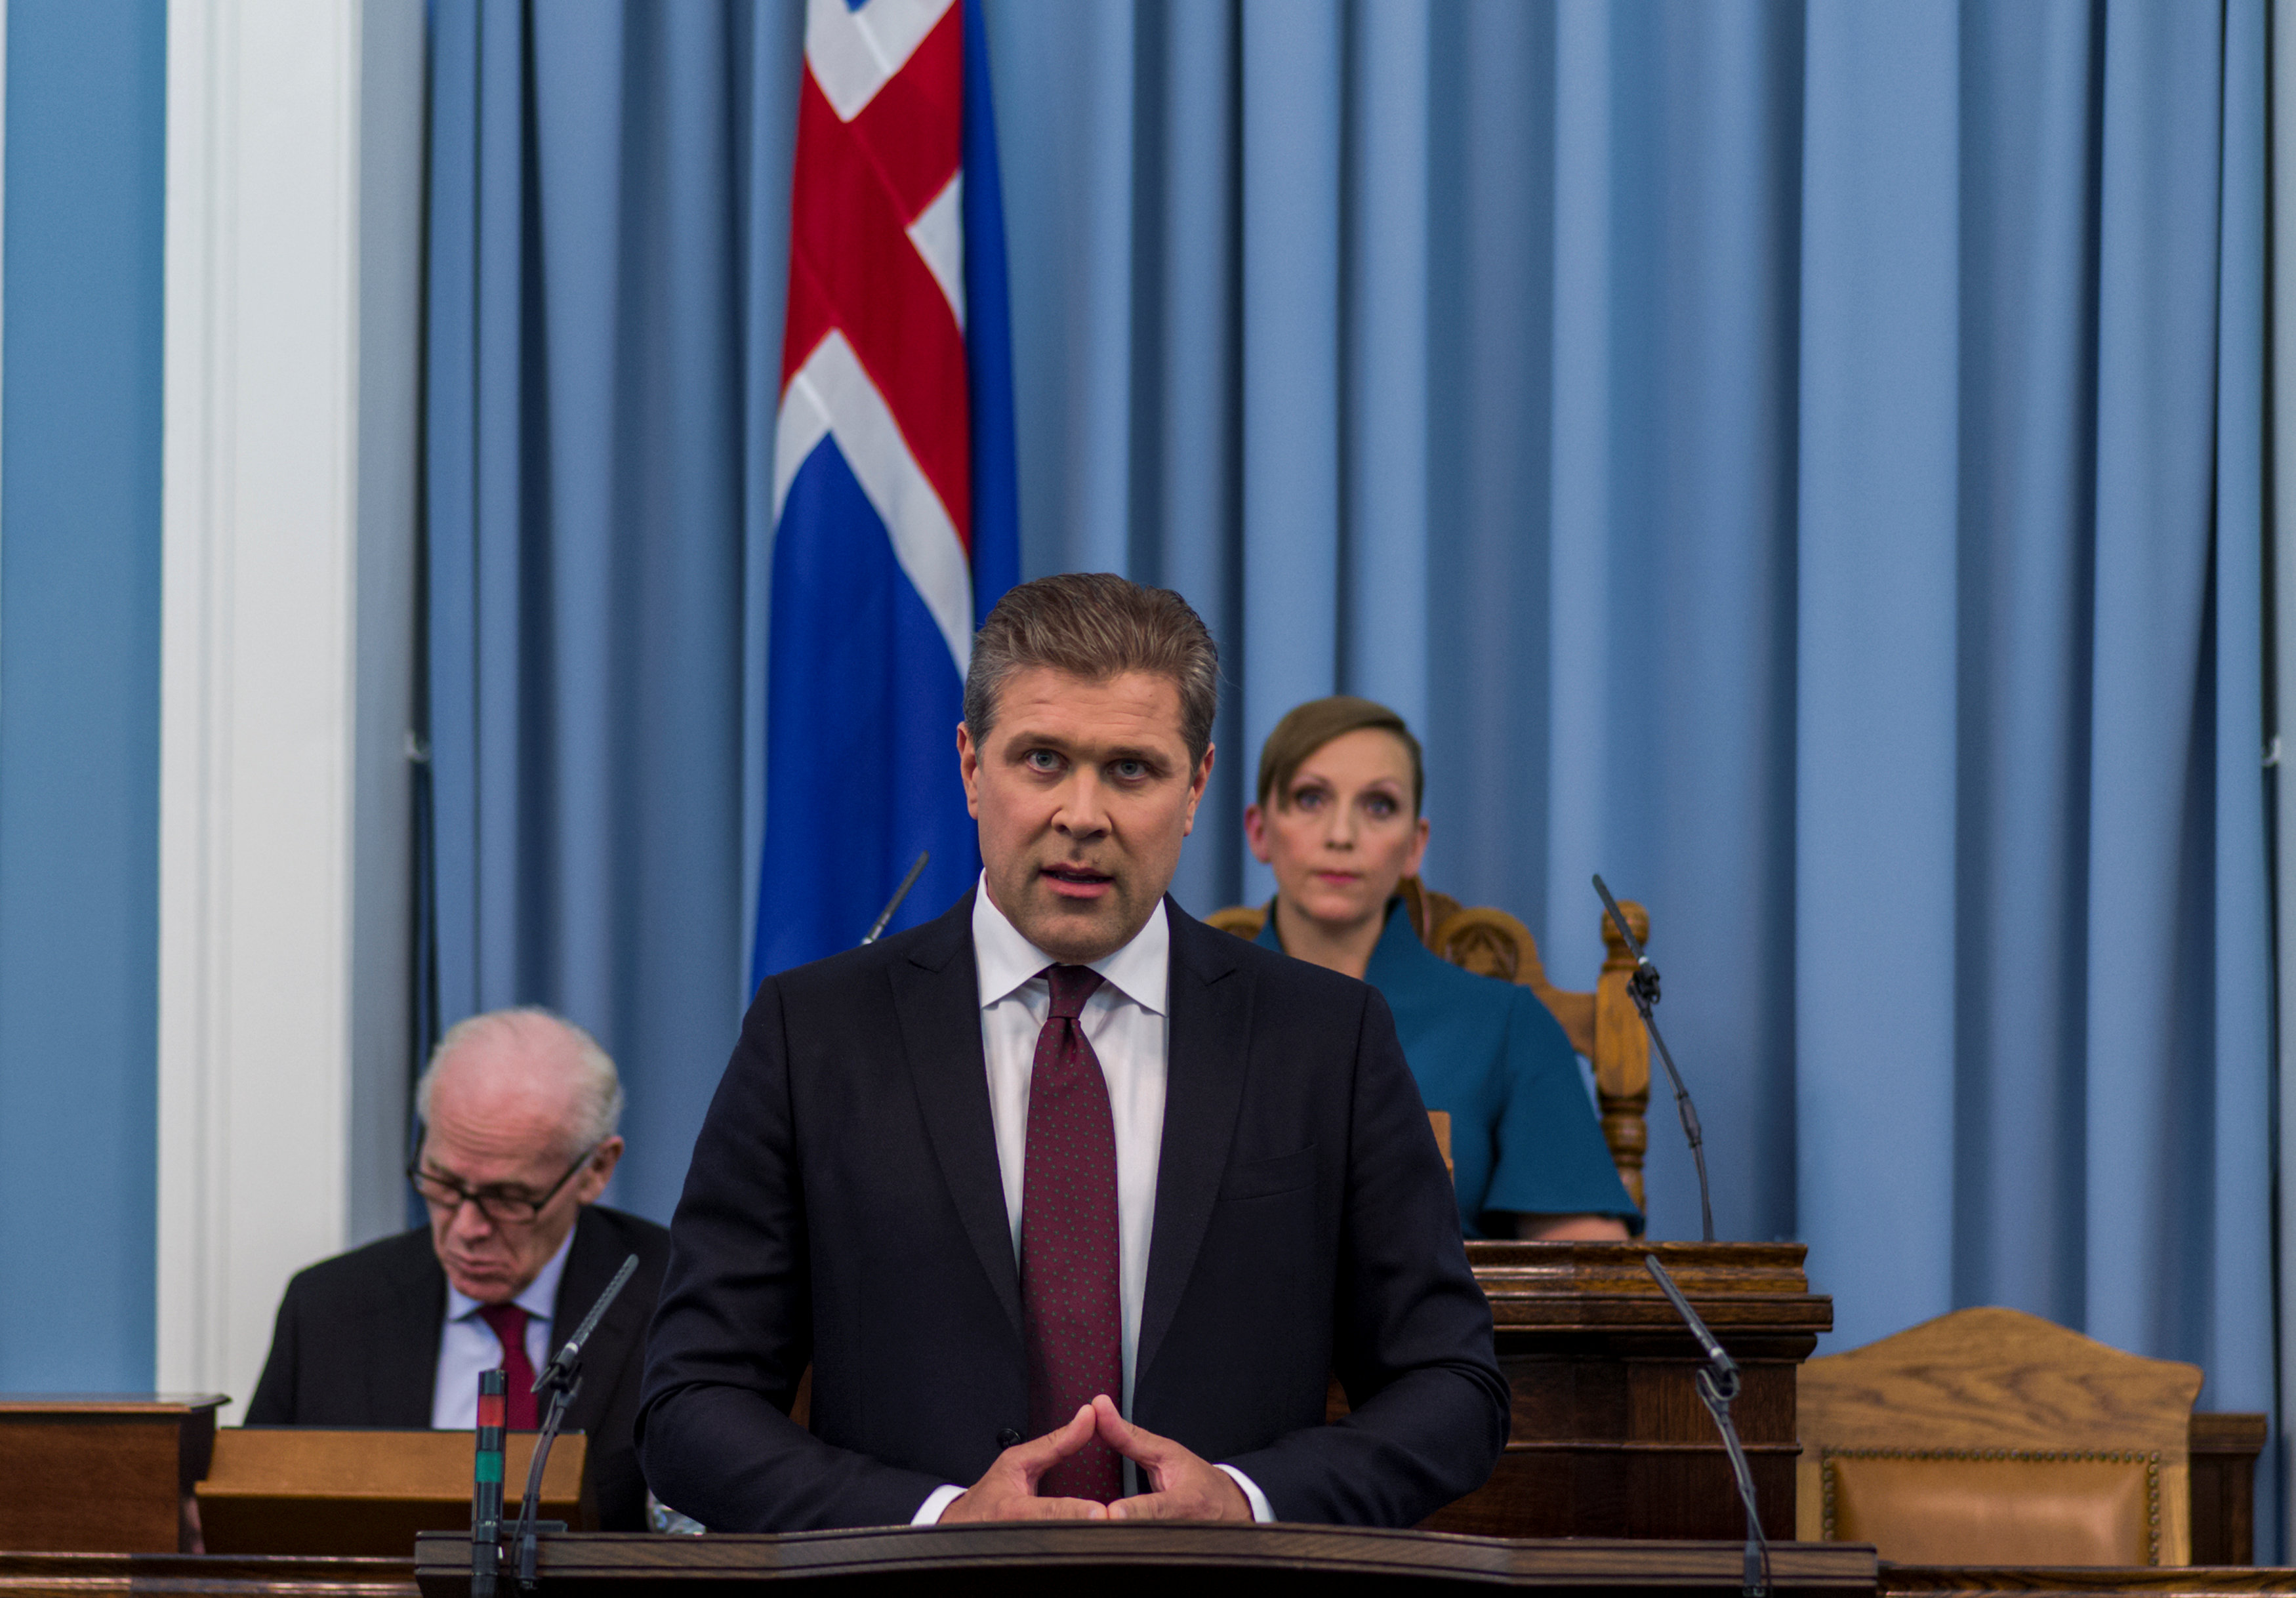 Prime Minister Bjarni Benediktsson speaks in Parliament in Reykjavik, Iceland, September 13, 2017. REUTERS/Geirix